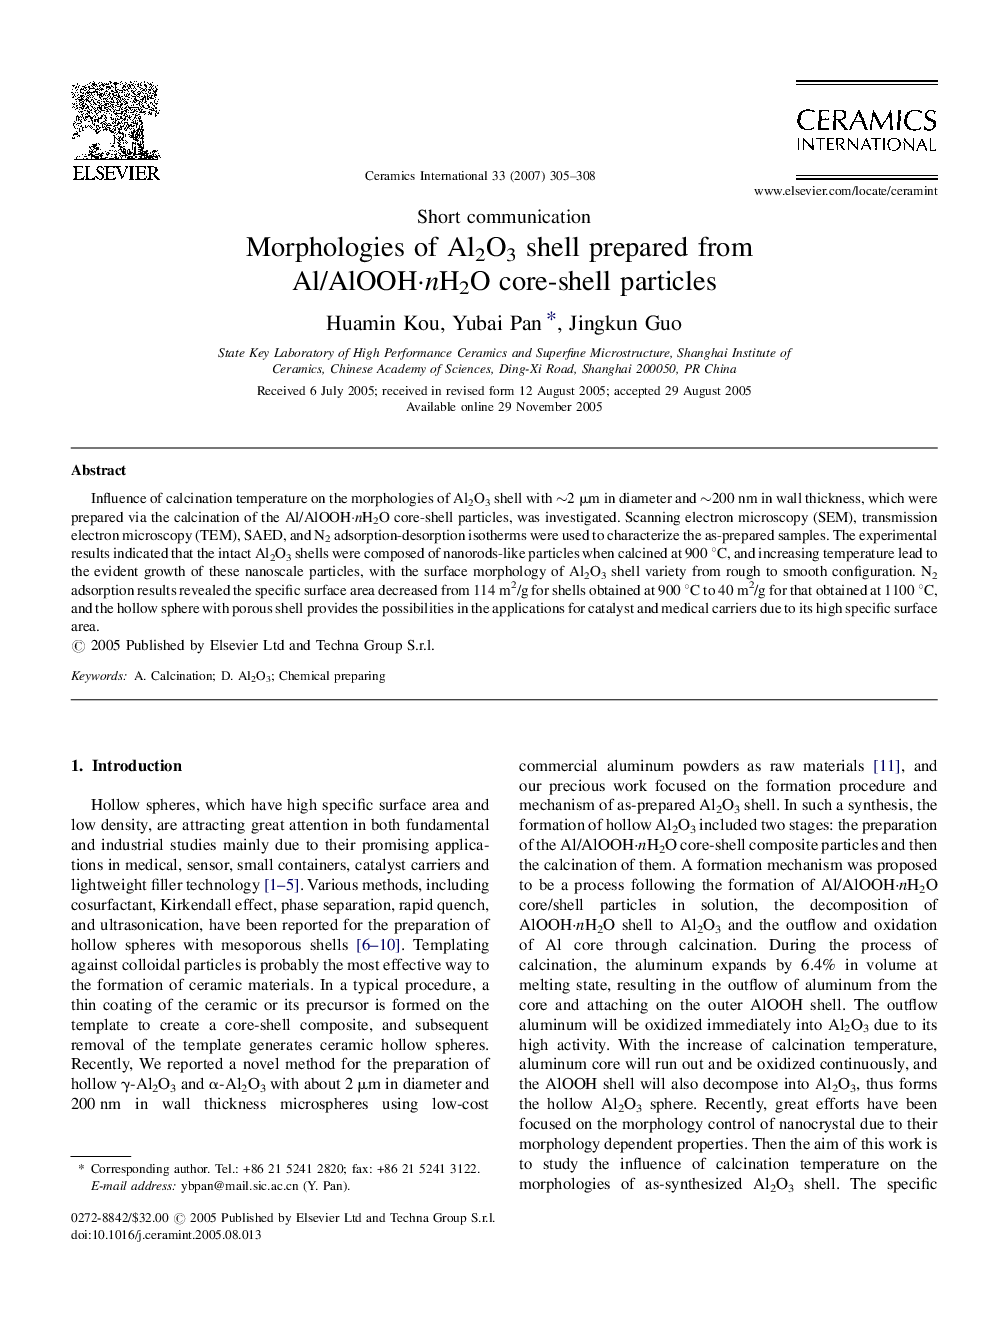 Morphologies of Al2O3 shell prepared from Al/AlOOHÂ·nH2O core-shell particles